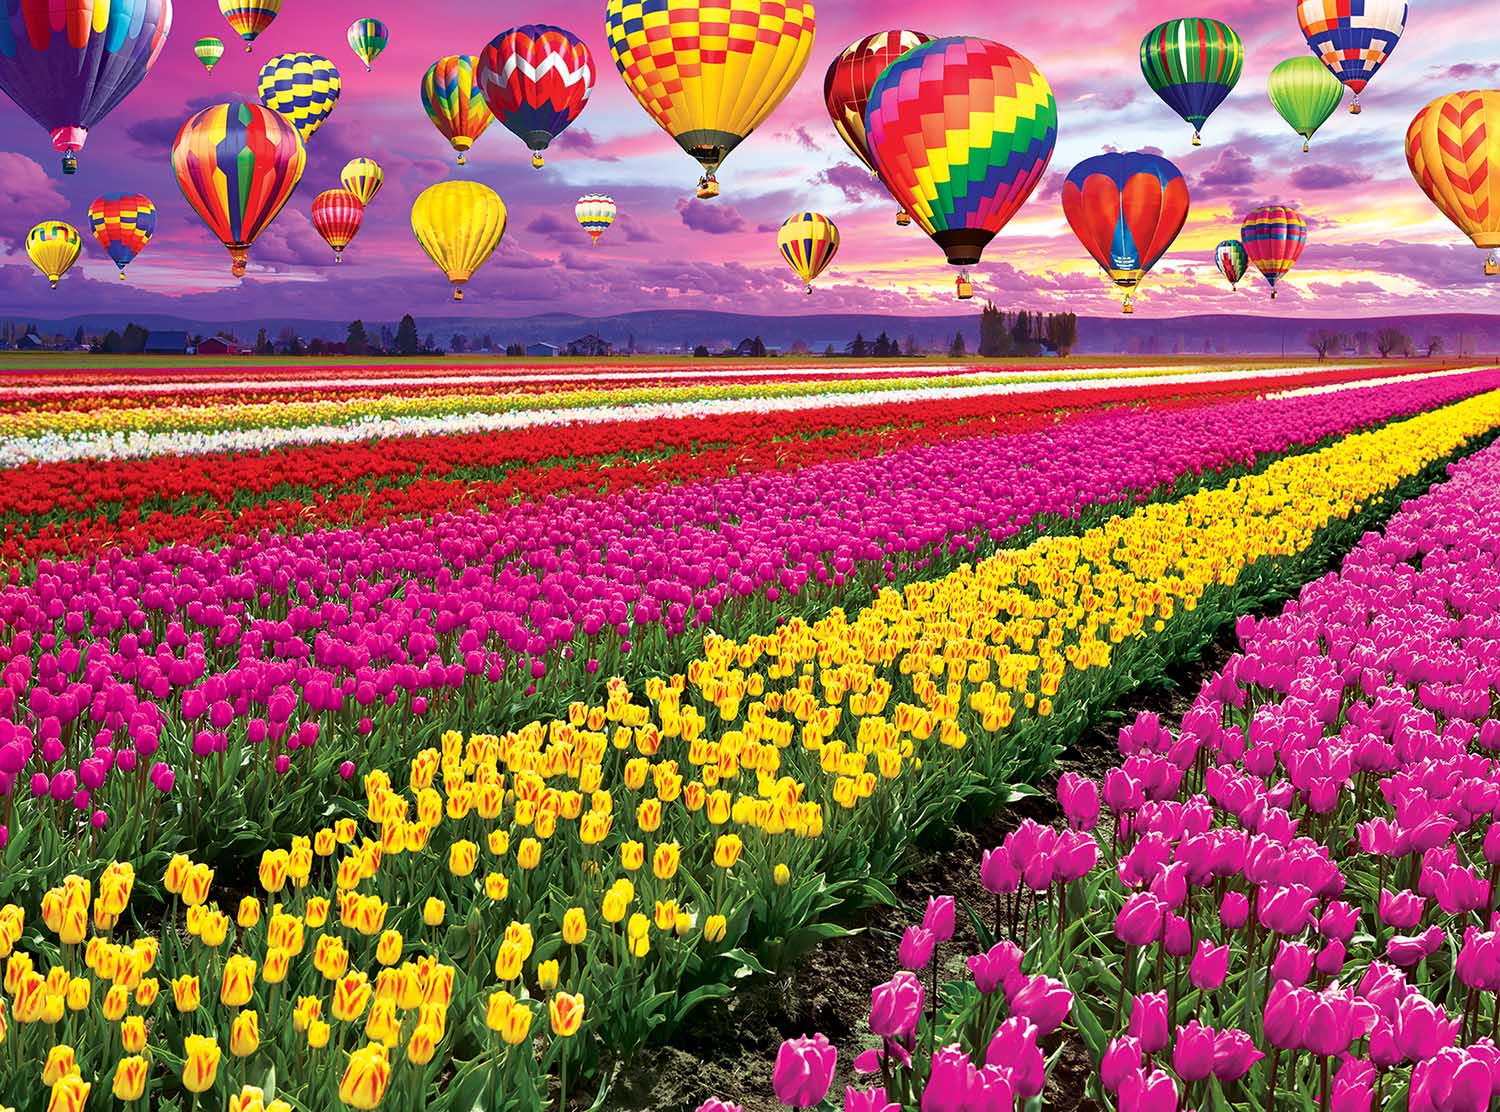 Sunset Balloons Over Tulip Field Flower & Garden Jigsaw Puzzle